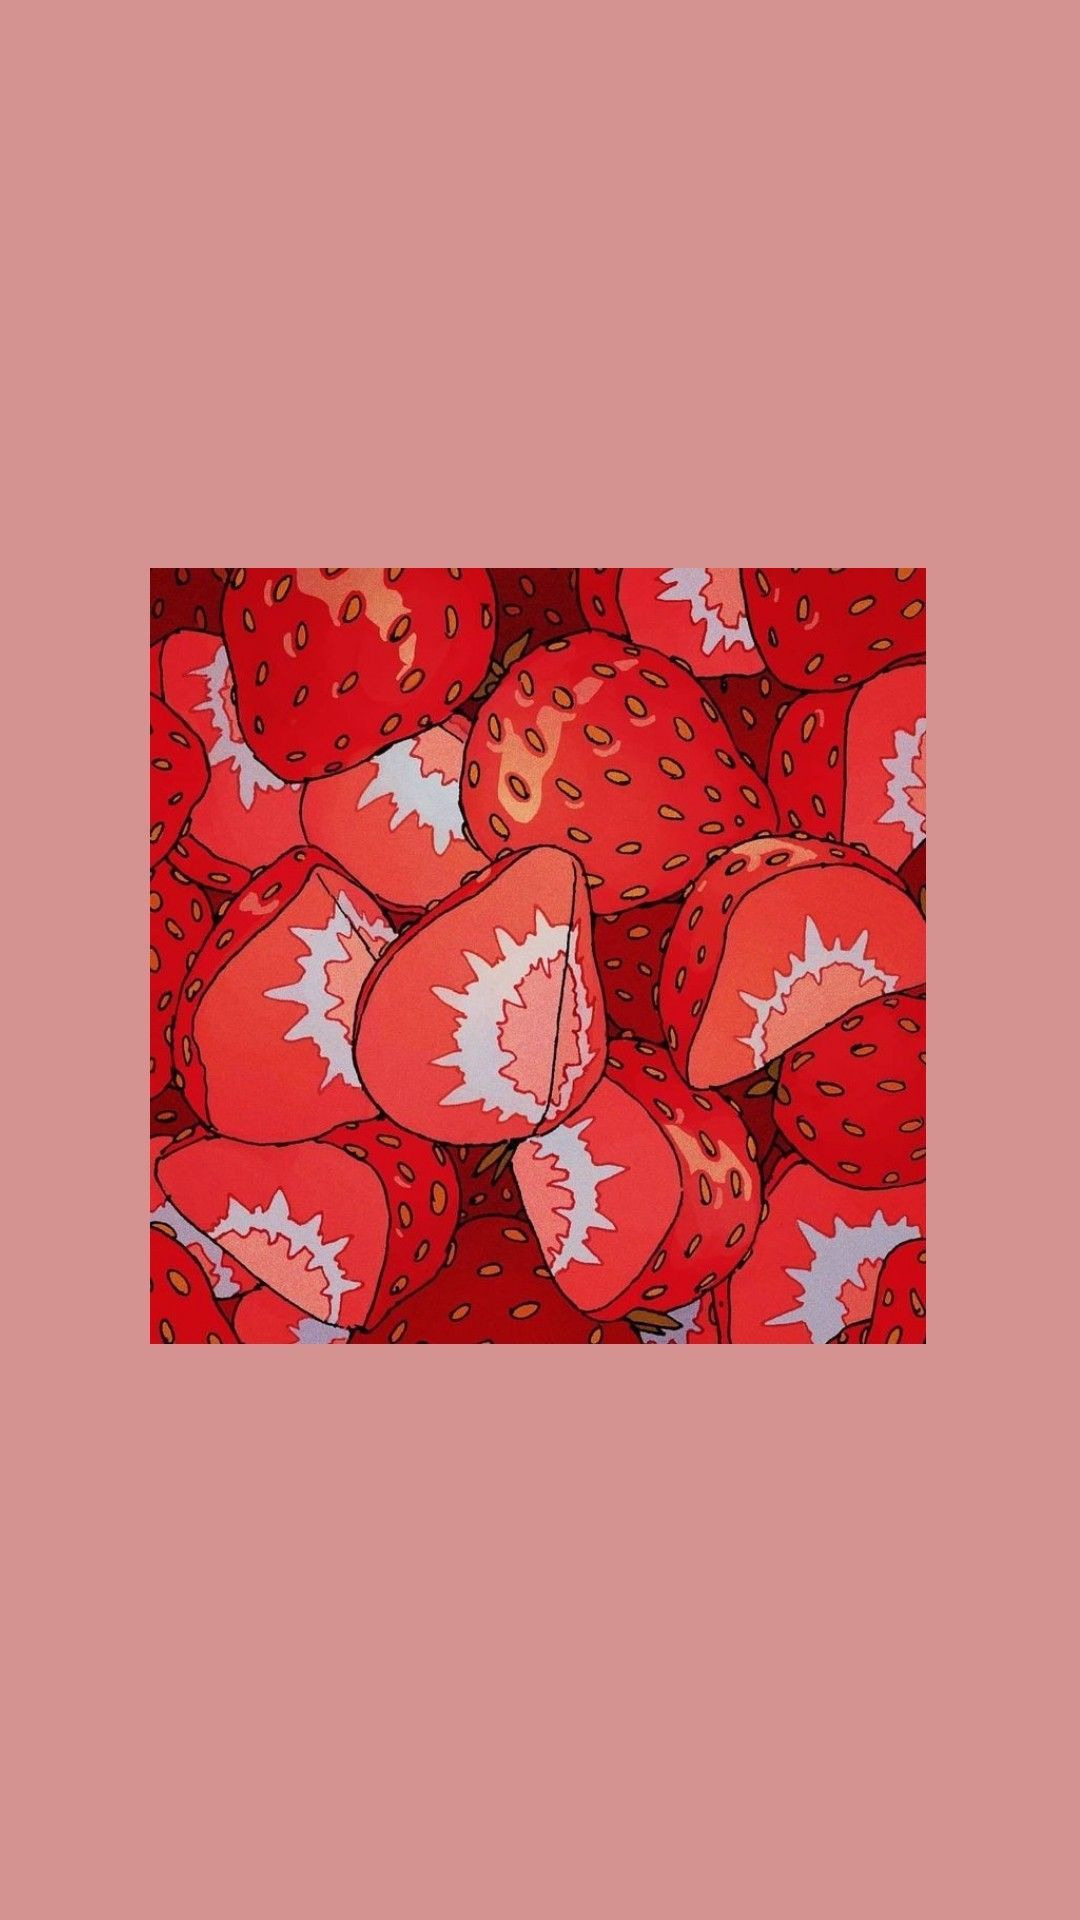 Anime Strawberry Wallpaper